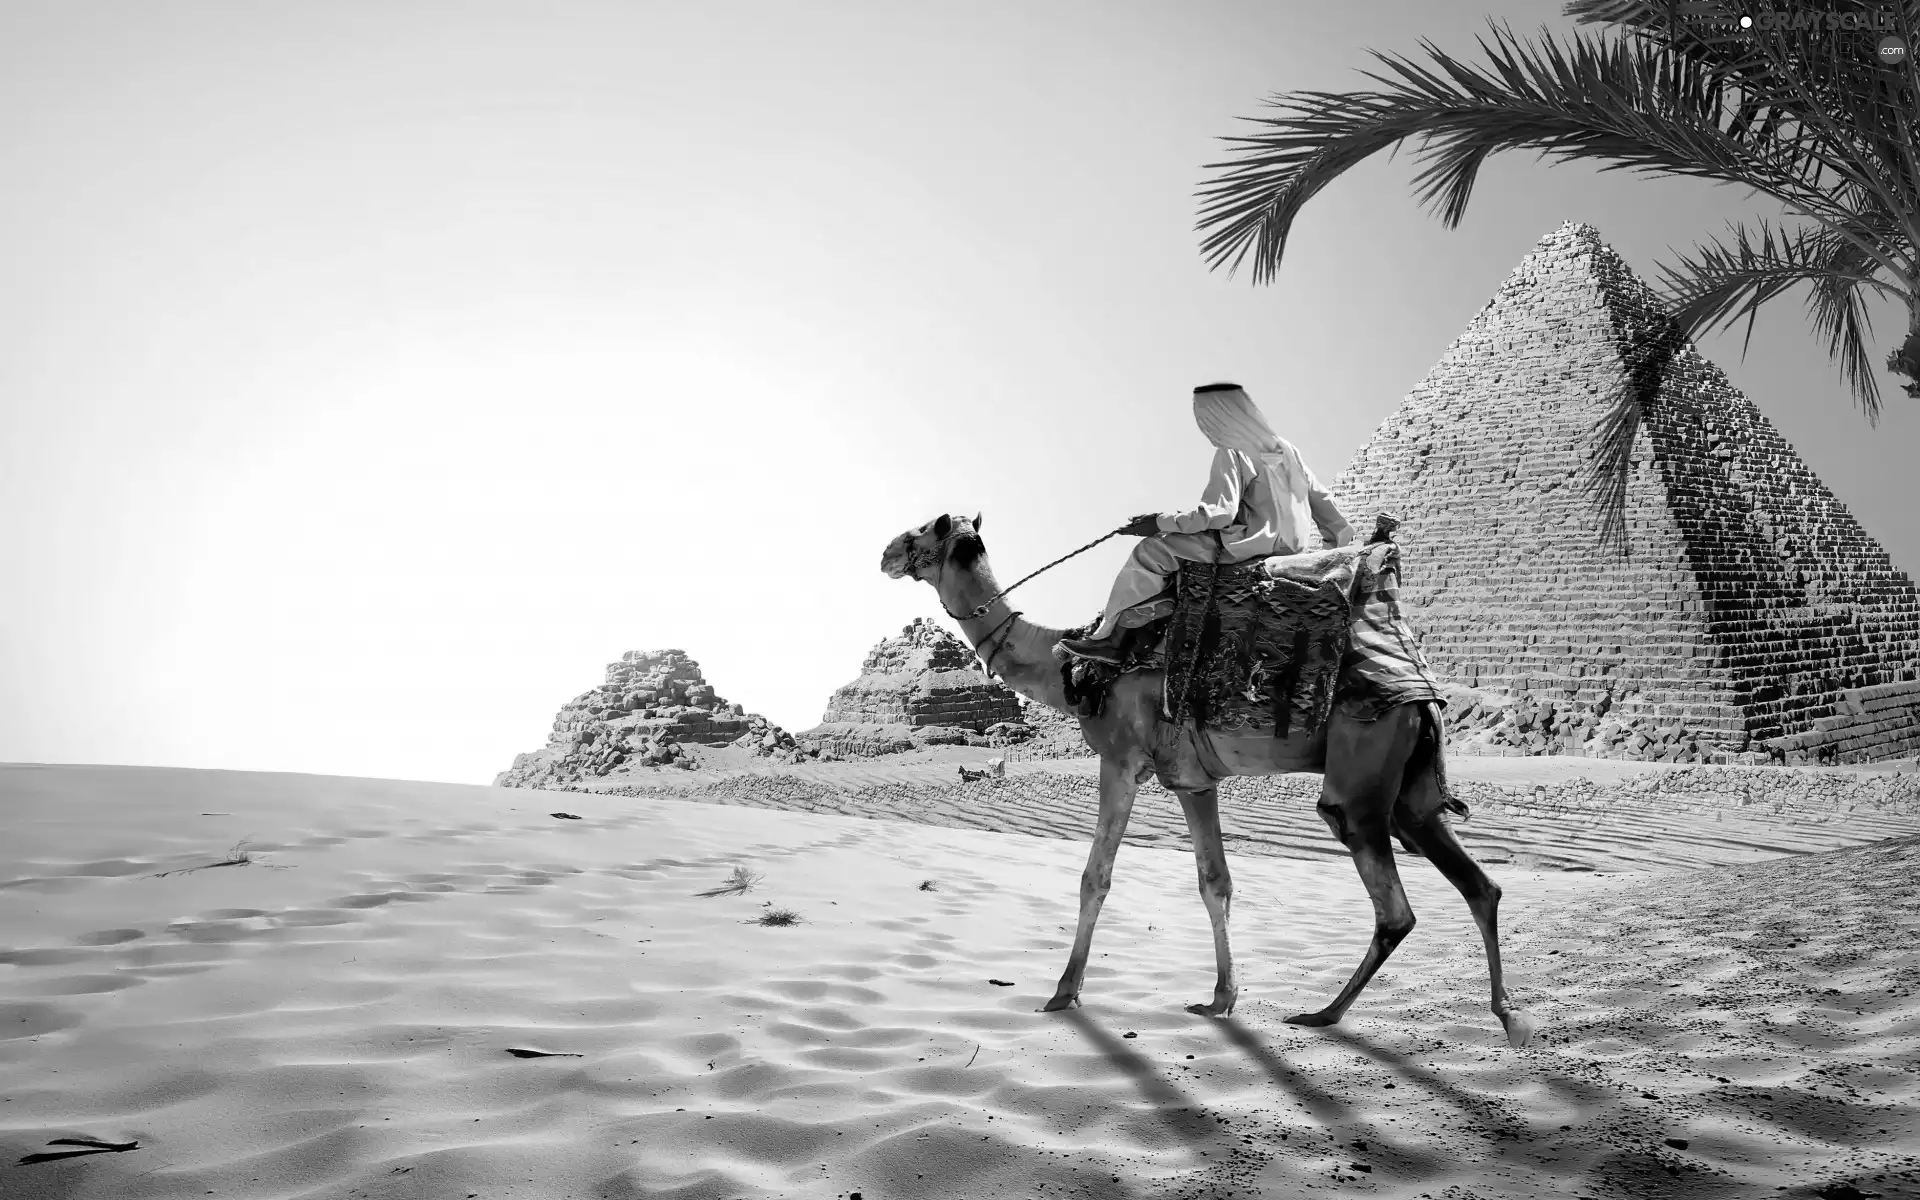 Sand, Camel, Palm, Pyramid, Egypt, Desert, Great Sunsets